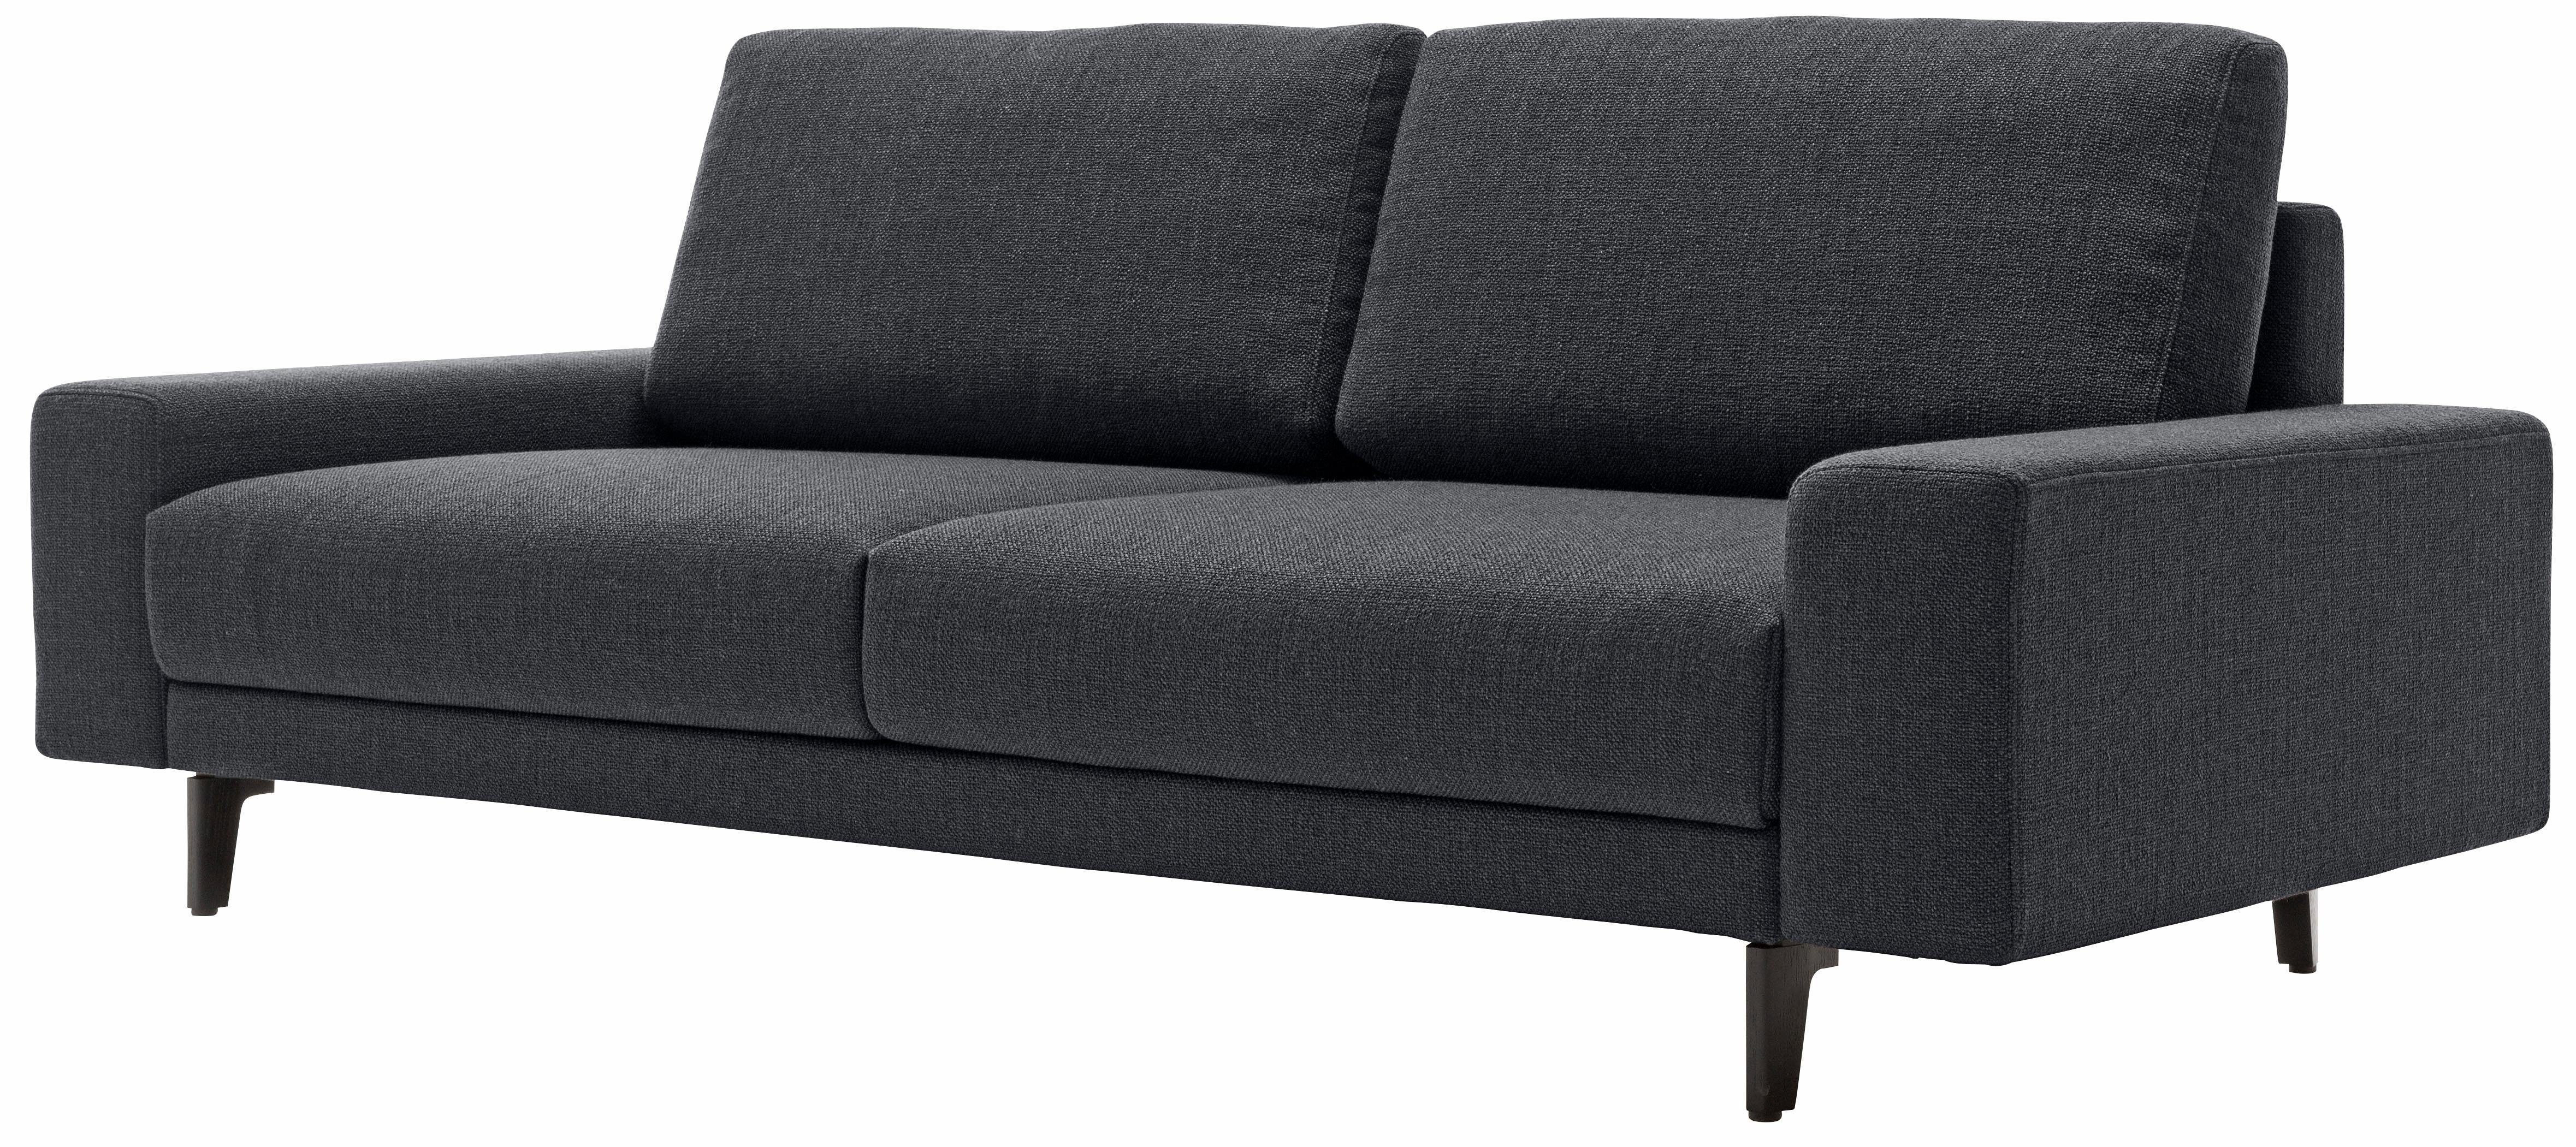 hülsta sofa 2-Sitzer hs.450, Armlehne Breite in niedrig, Alugussfüße umbragrau, cm 180 breit